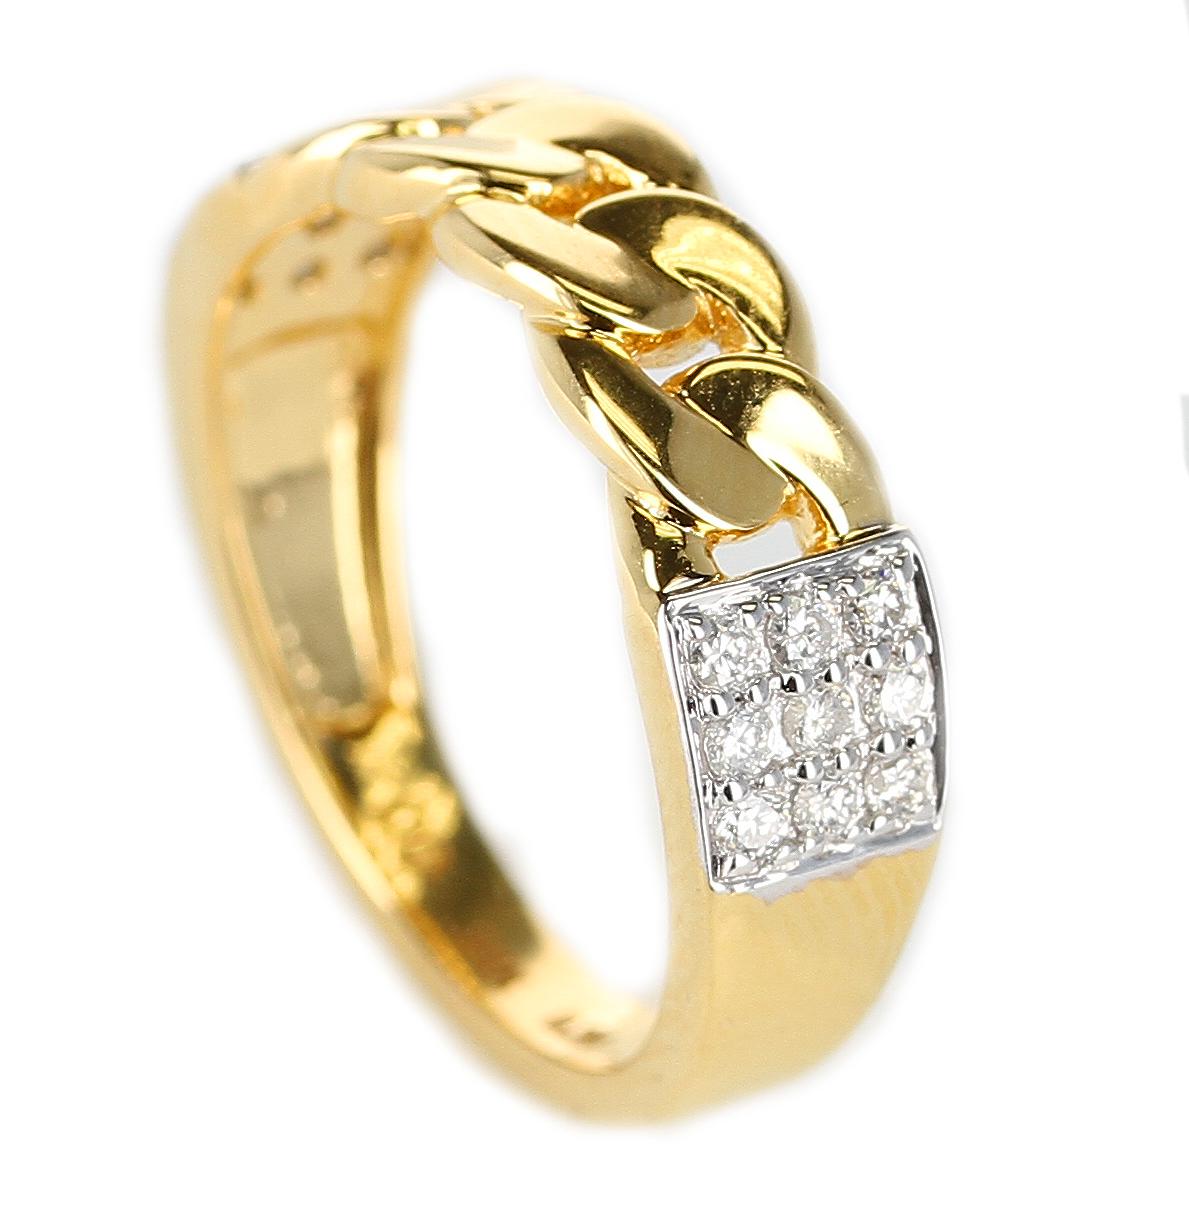 Round Cut Yellow Gold Rope-Style Ring with Diamonds, 14 Karat